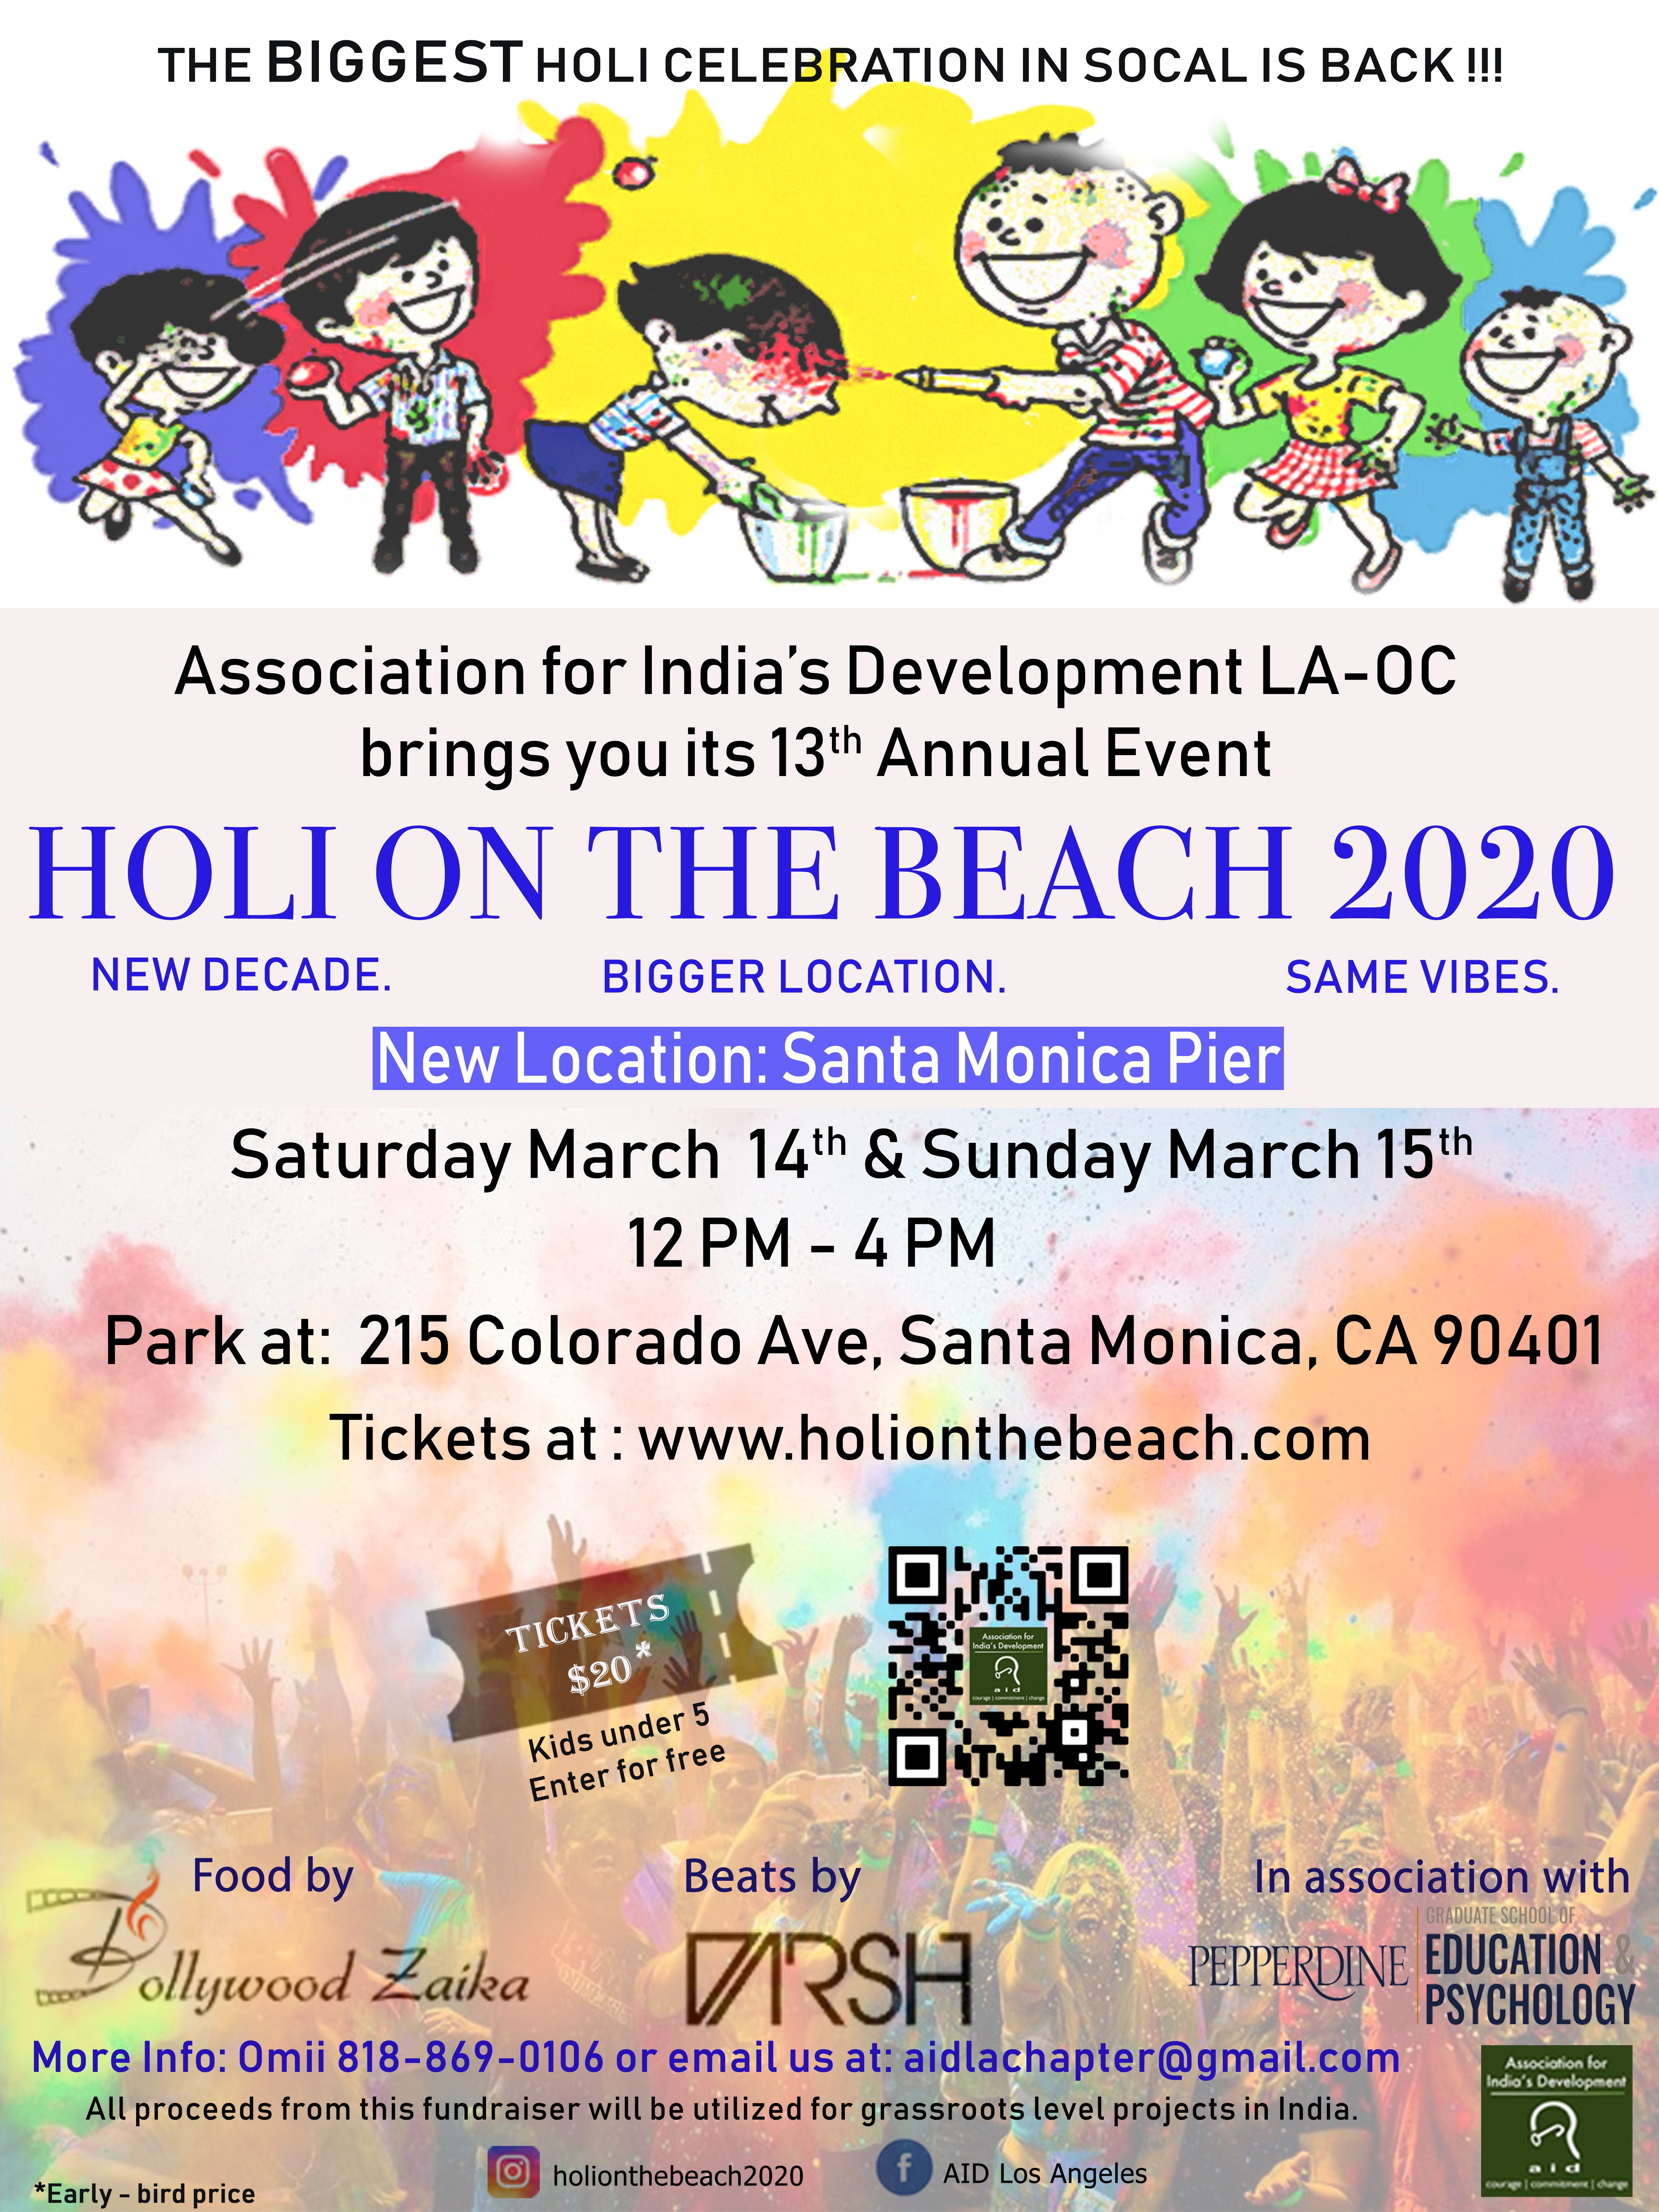 Holi on the Beach 2020 (Festival Of Colors LA-OC) 
Sunday, March 15th